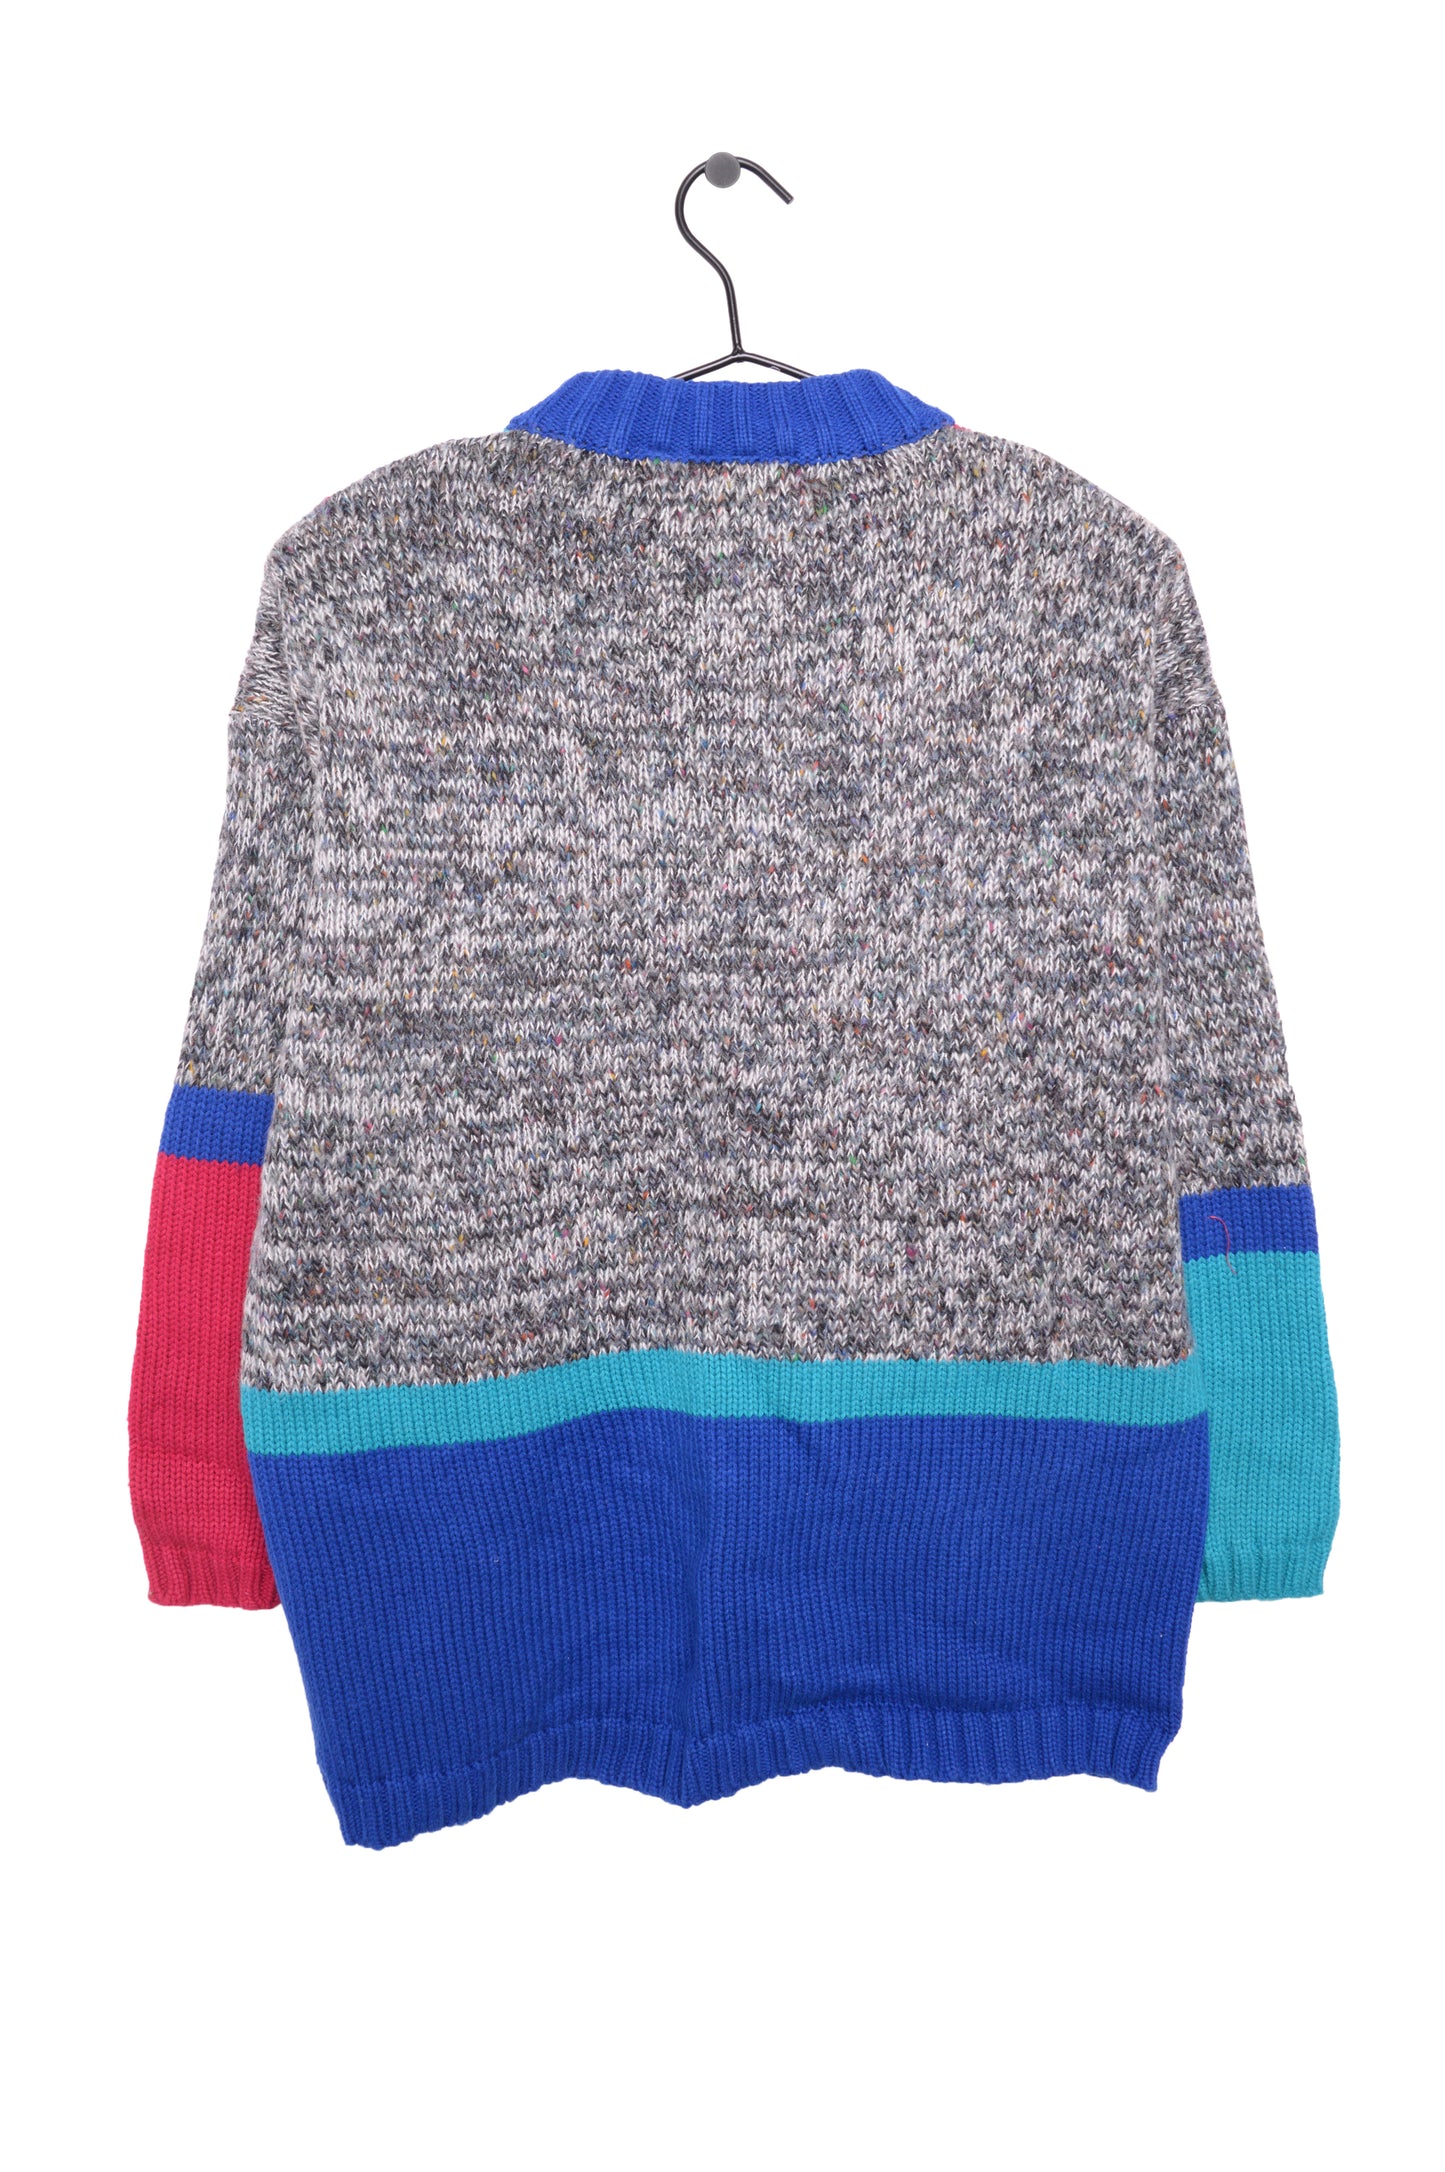 Pop Art Shapes Sweater